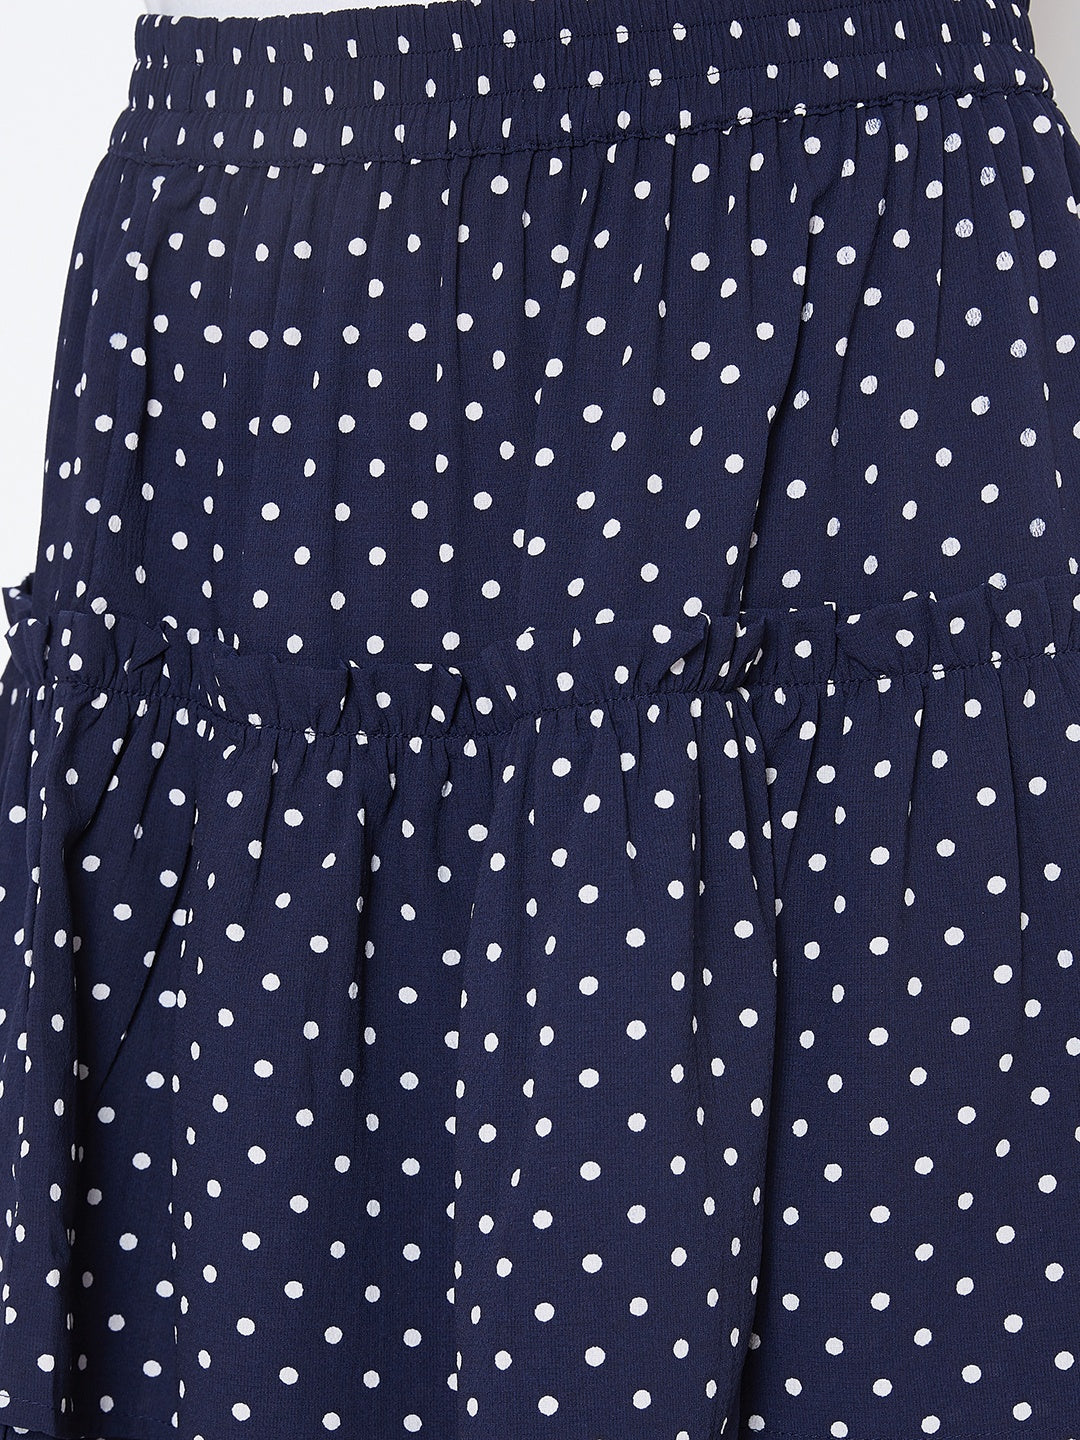 Berrylush Women Navy Blue Polka Dot Print Layered Slip-On Mini Skirt